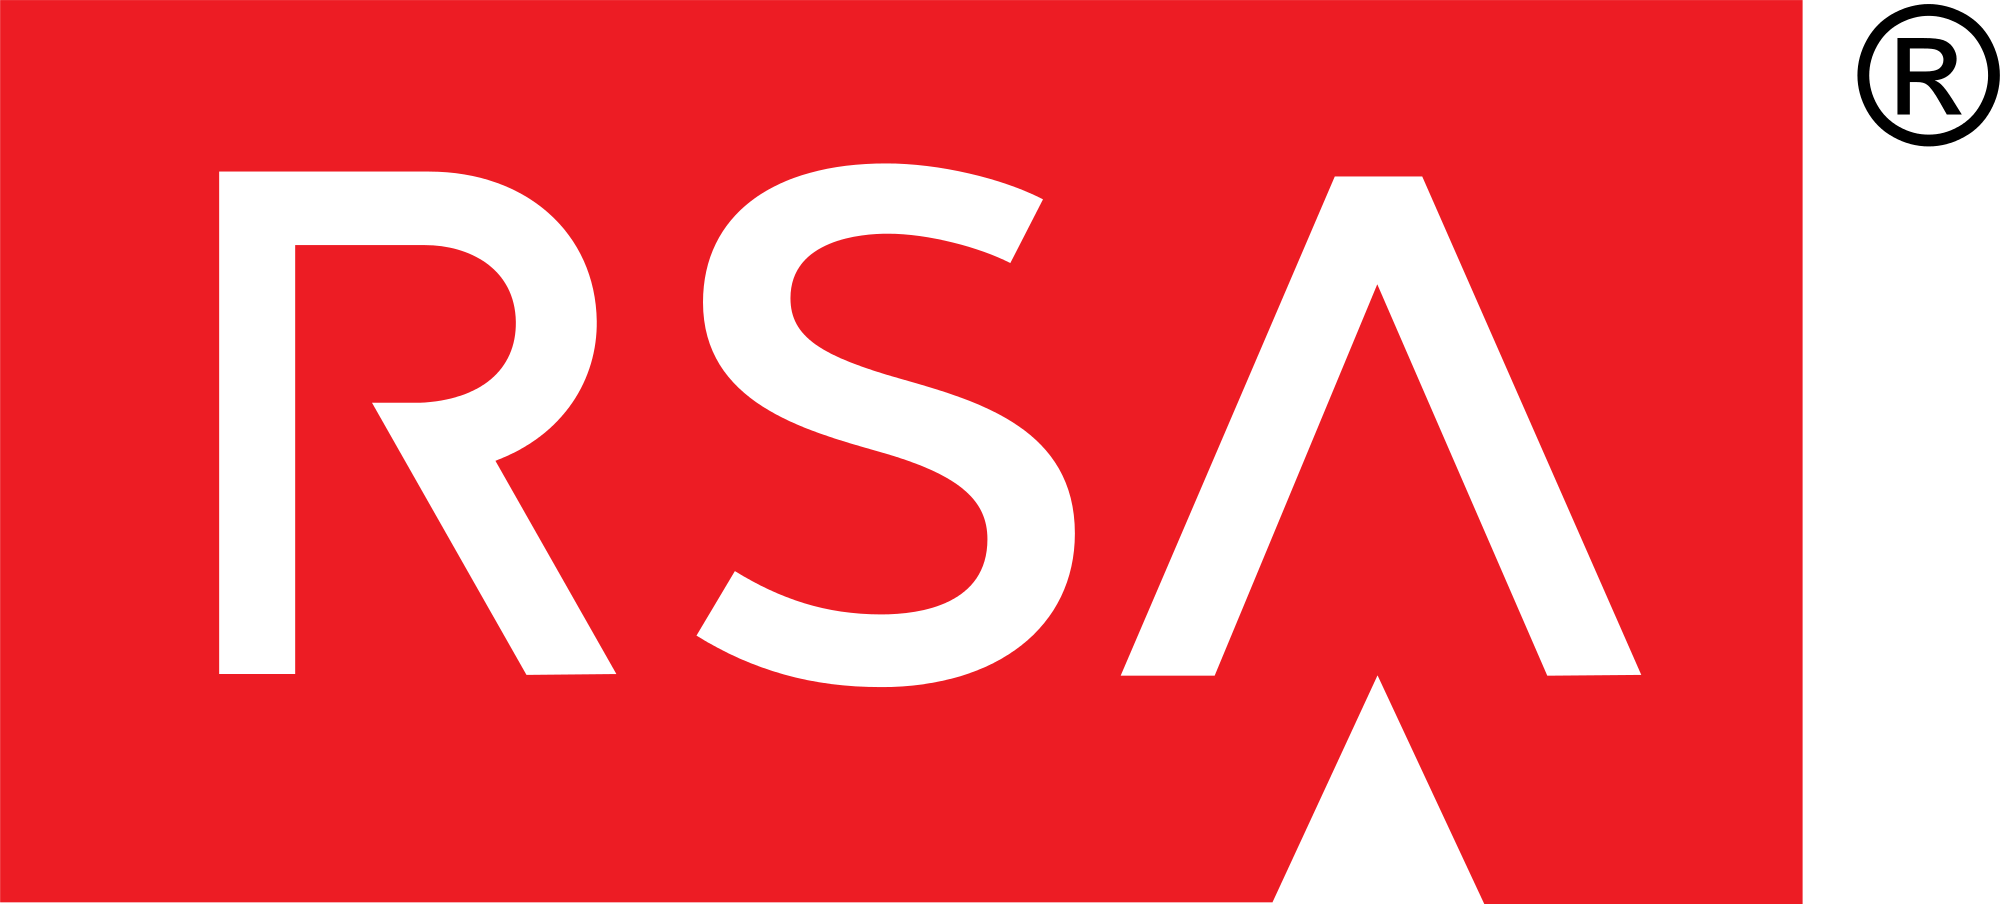 RSA Logo - RSA Security logo.svg